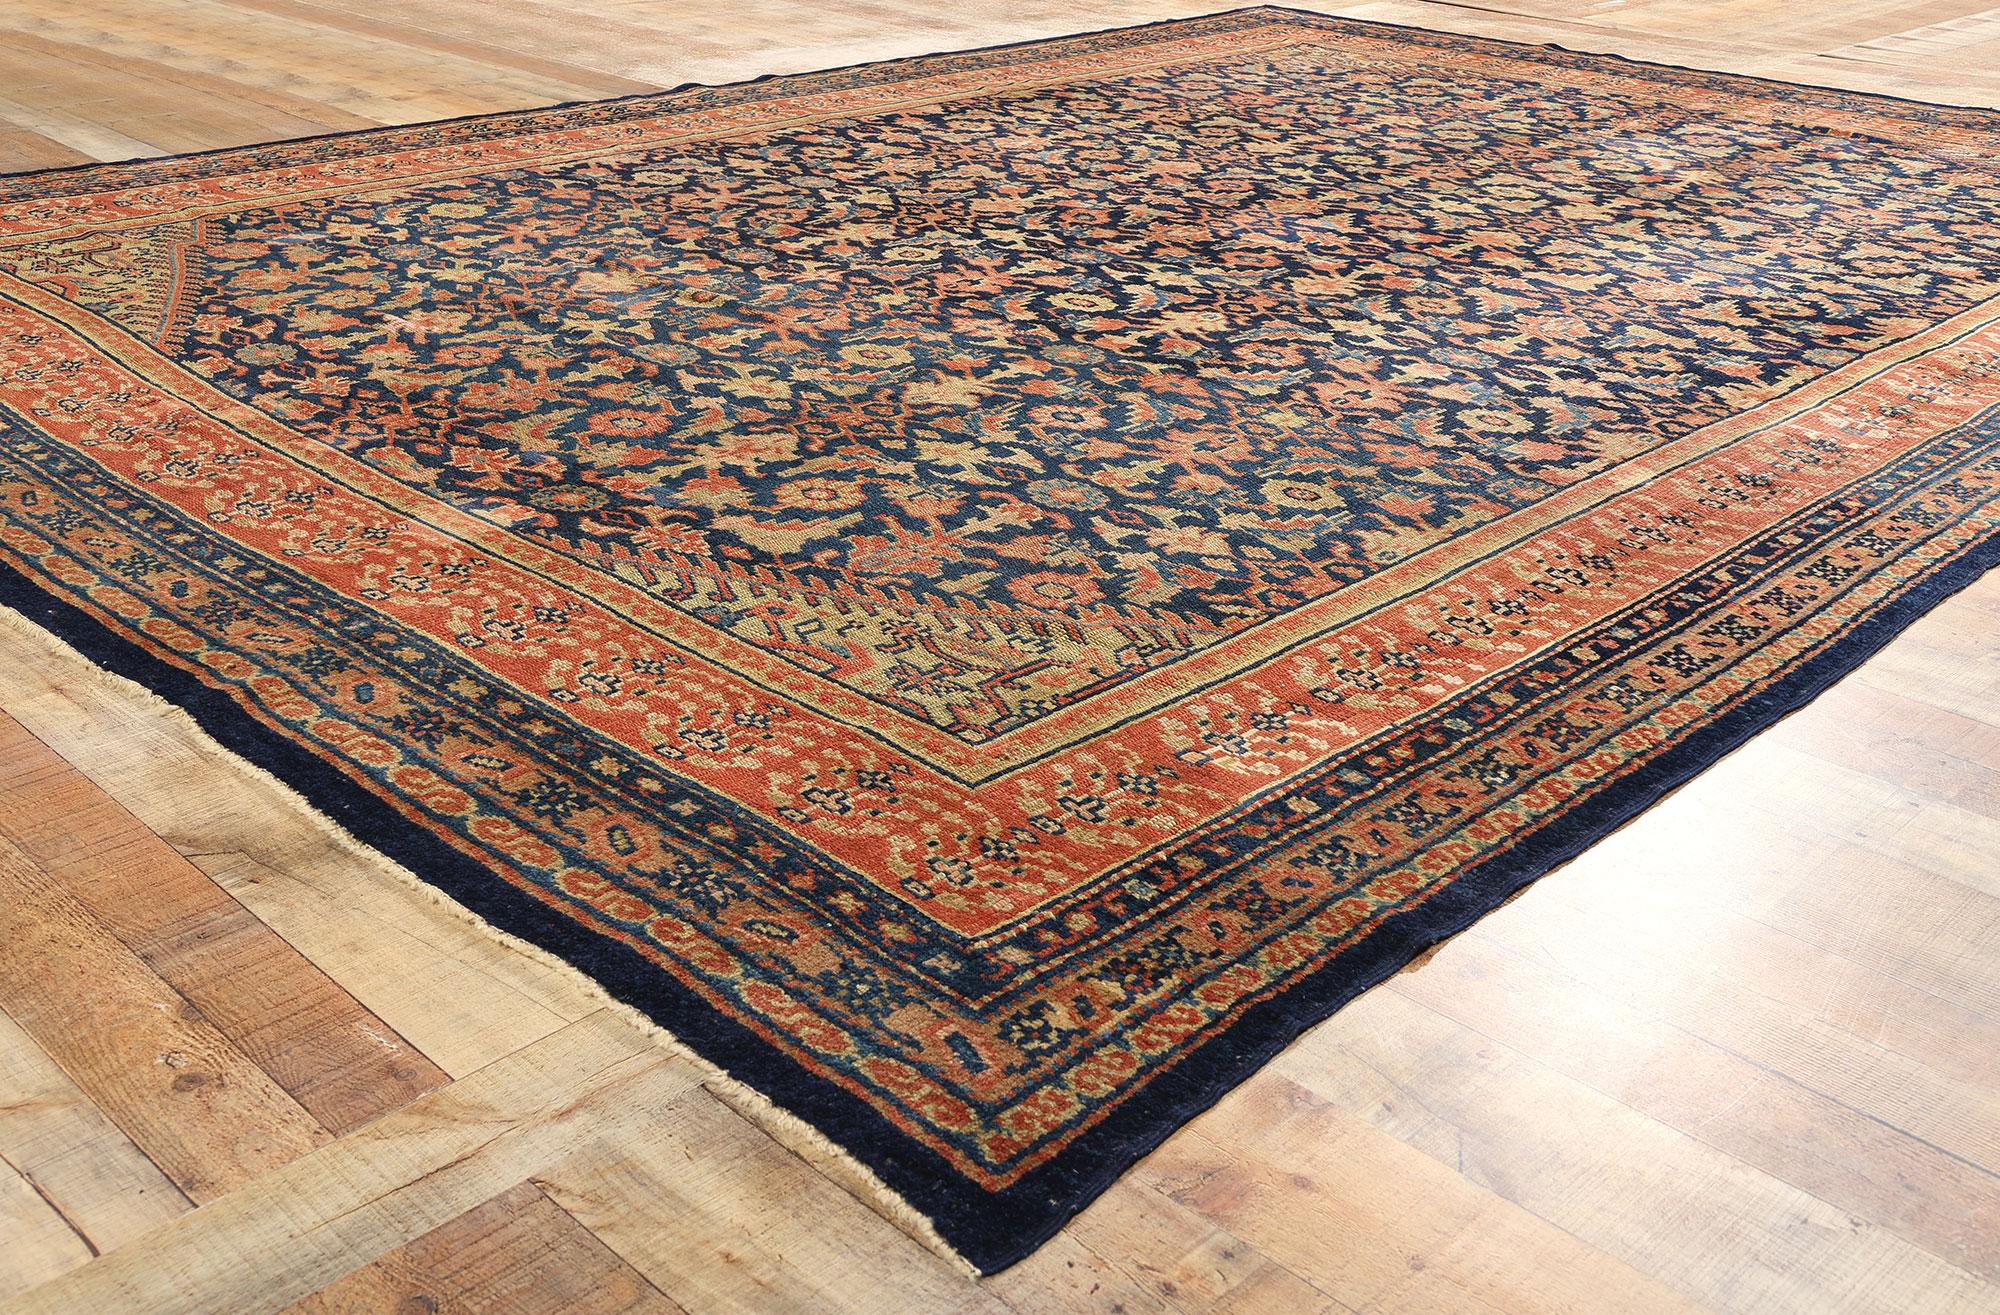 Late 19th Century Distressed Antique Navy Blue Persian Kurdish Carpet For Sale 1